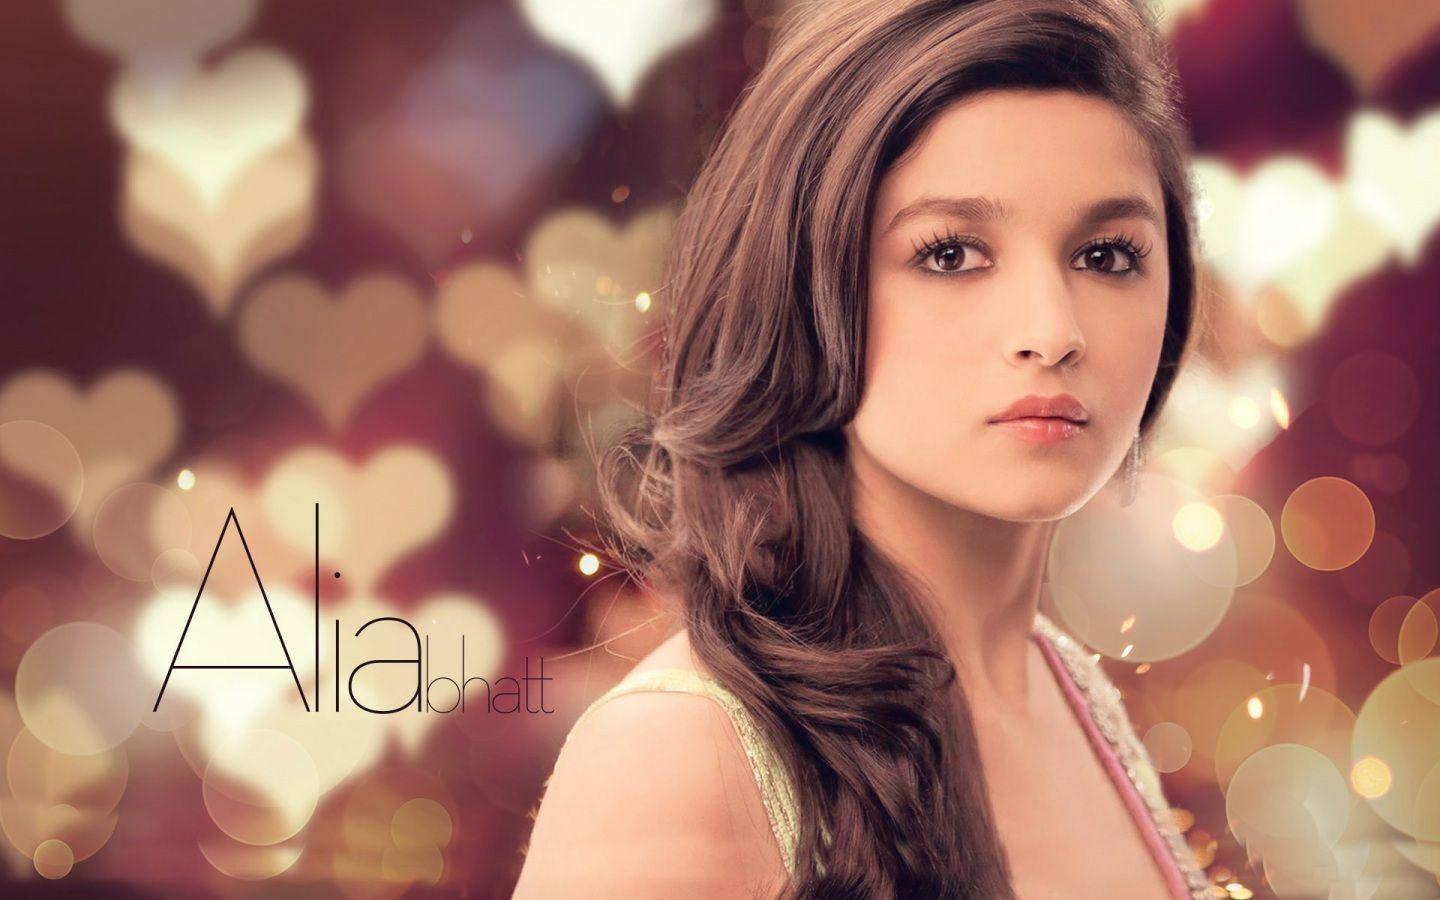 Indian Beautiful Girl HD Wallpaper Free Download, Alia Bhatt. Alia